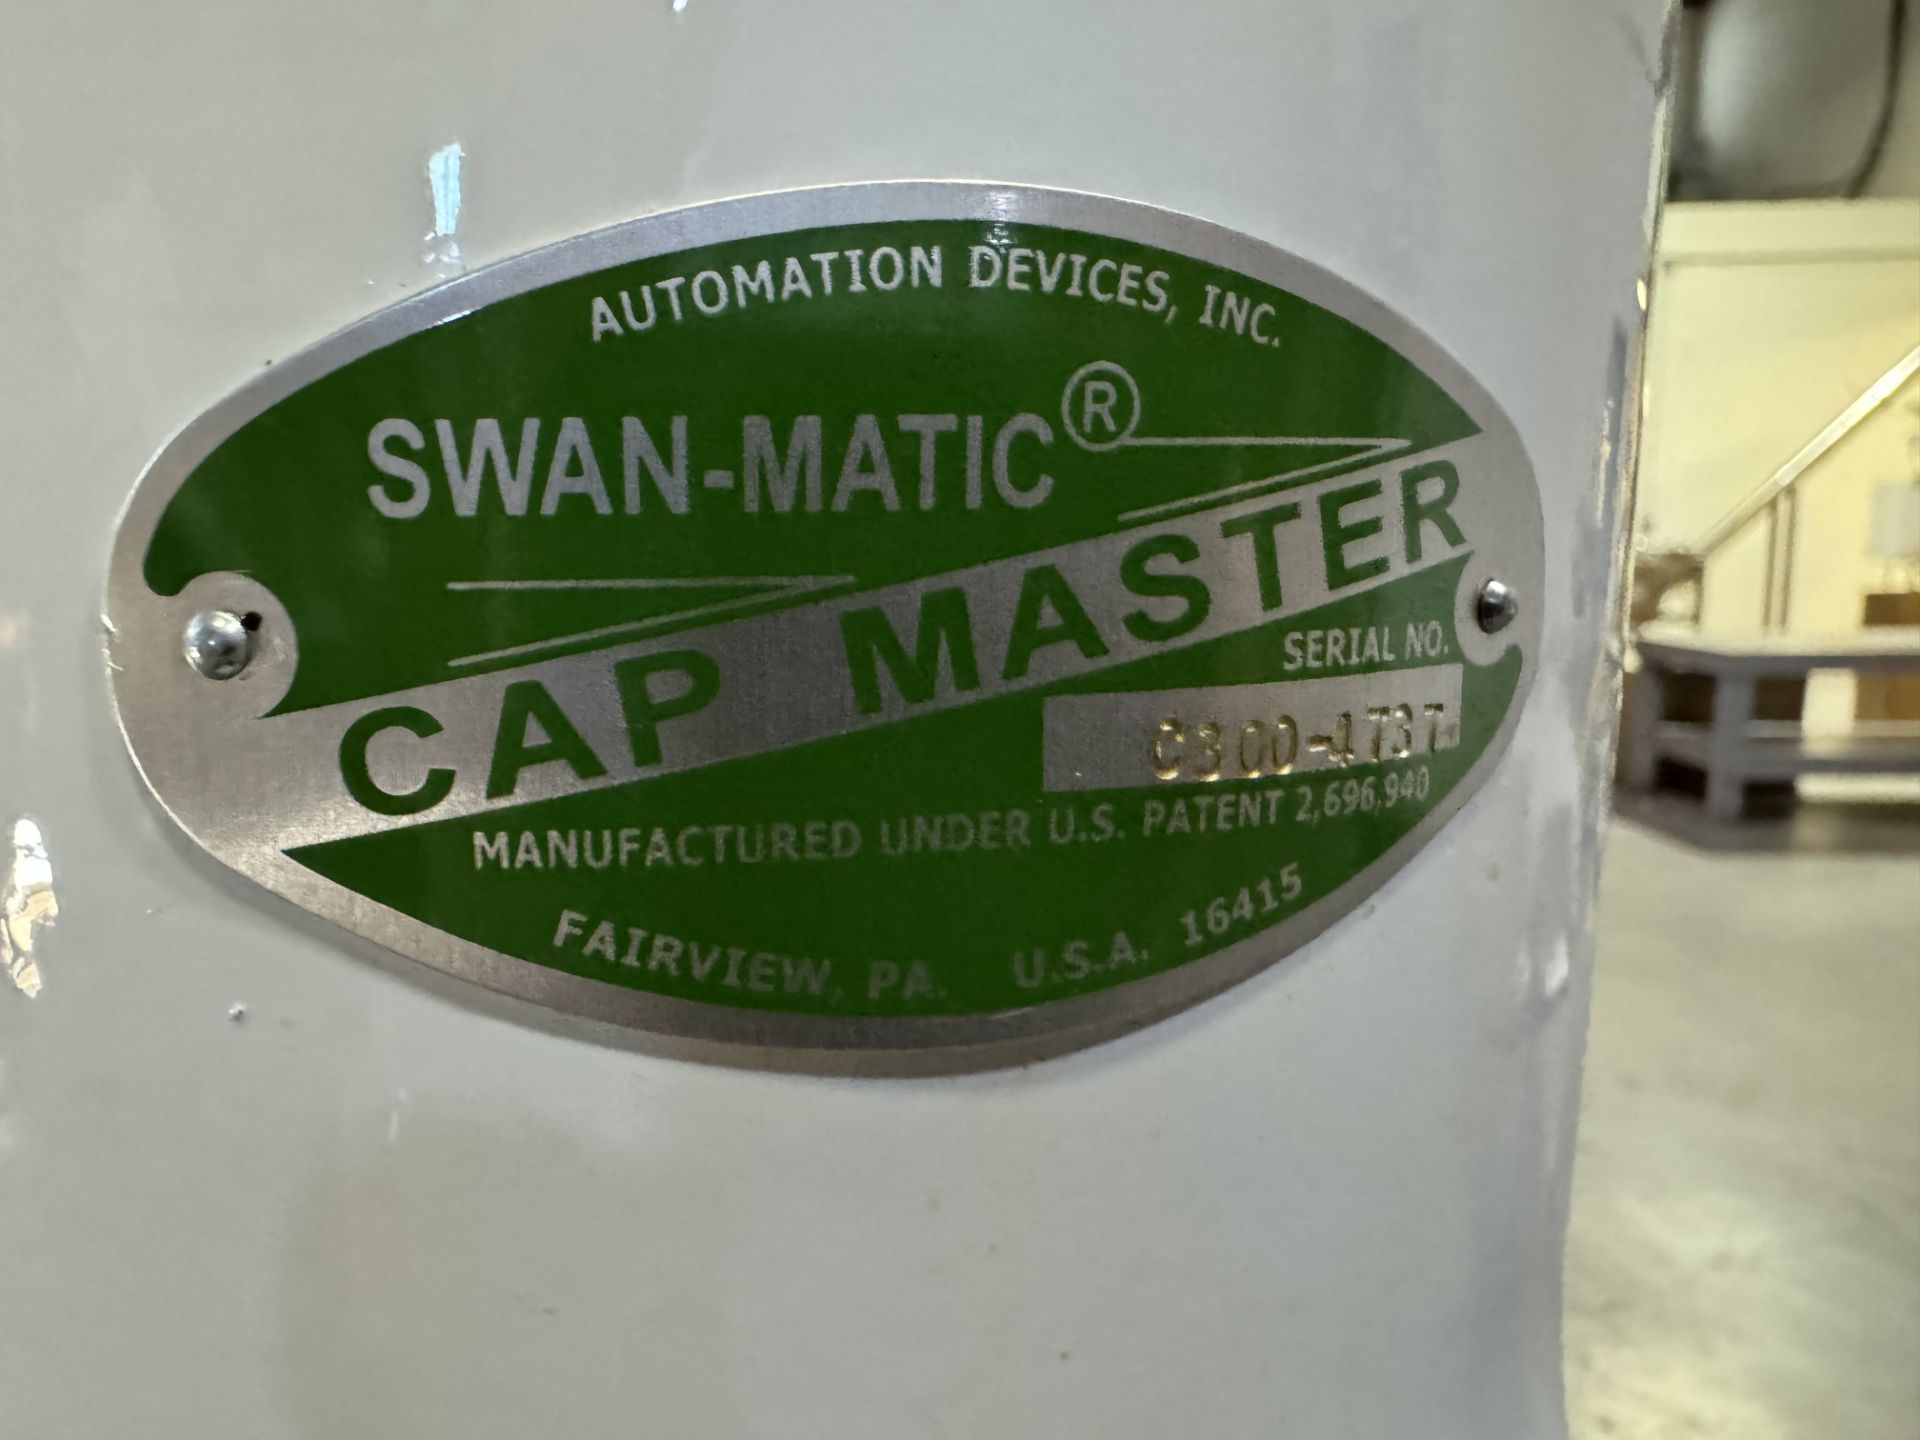 Swanmatic model C300 Cap Master semi-automatic capper - Image 7 of 8